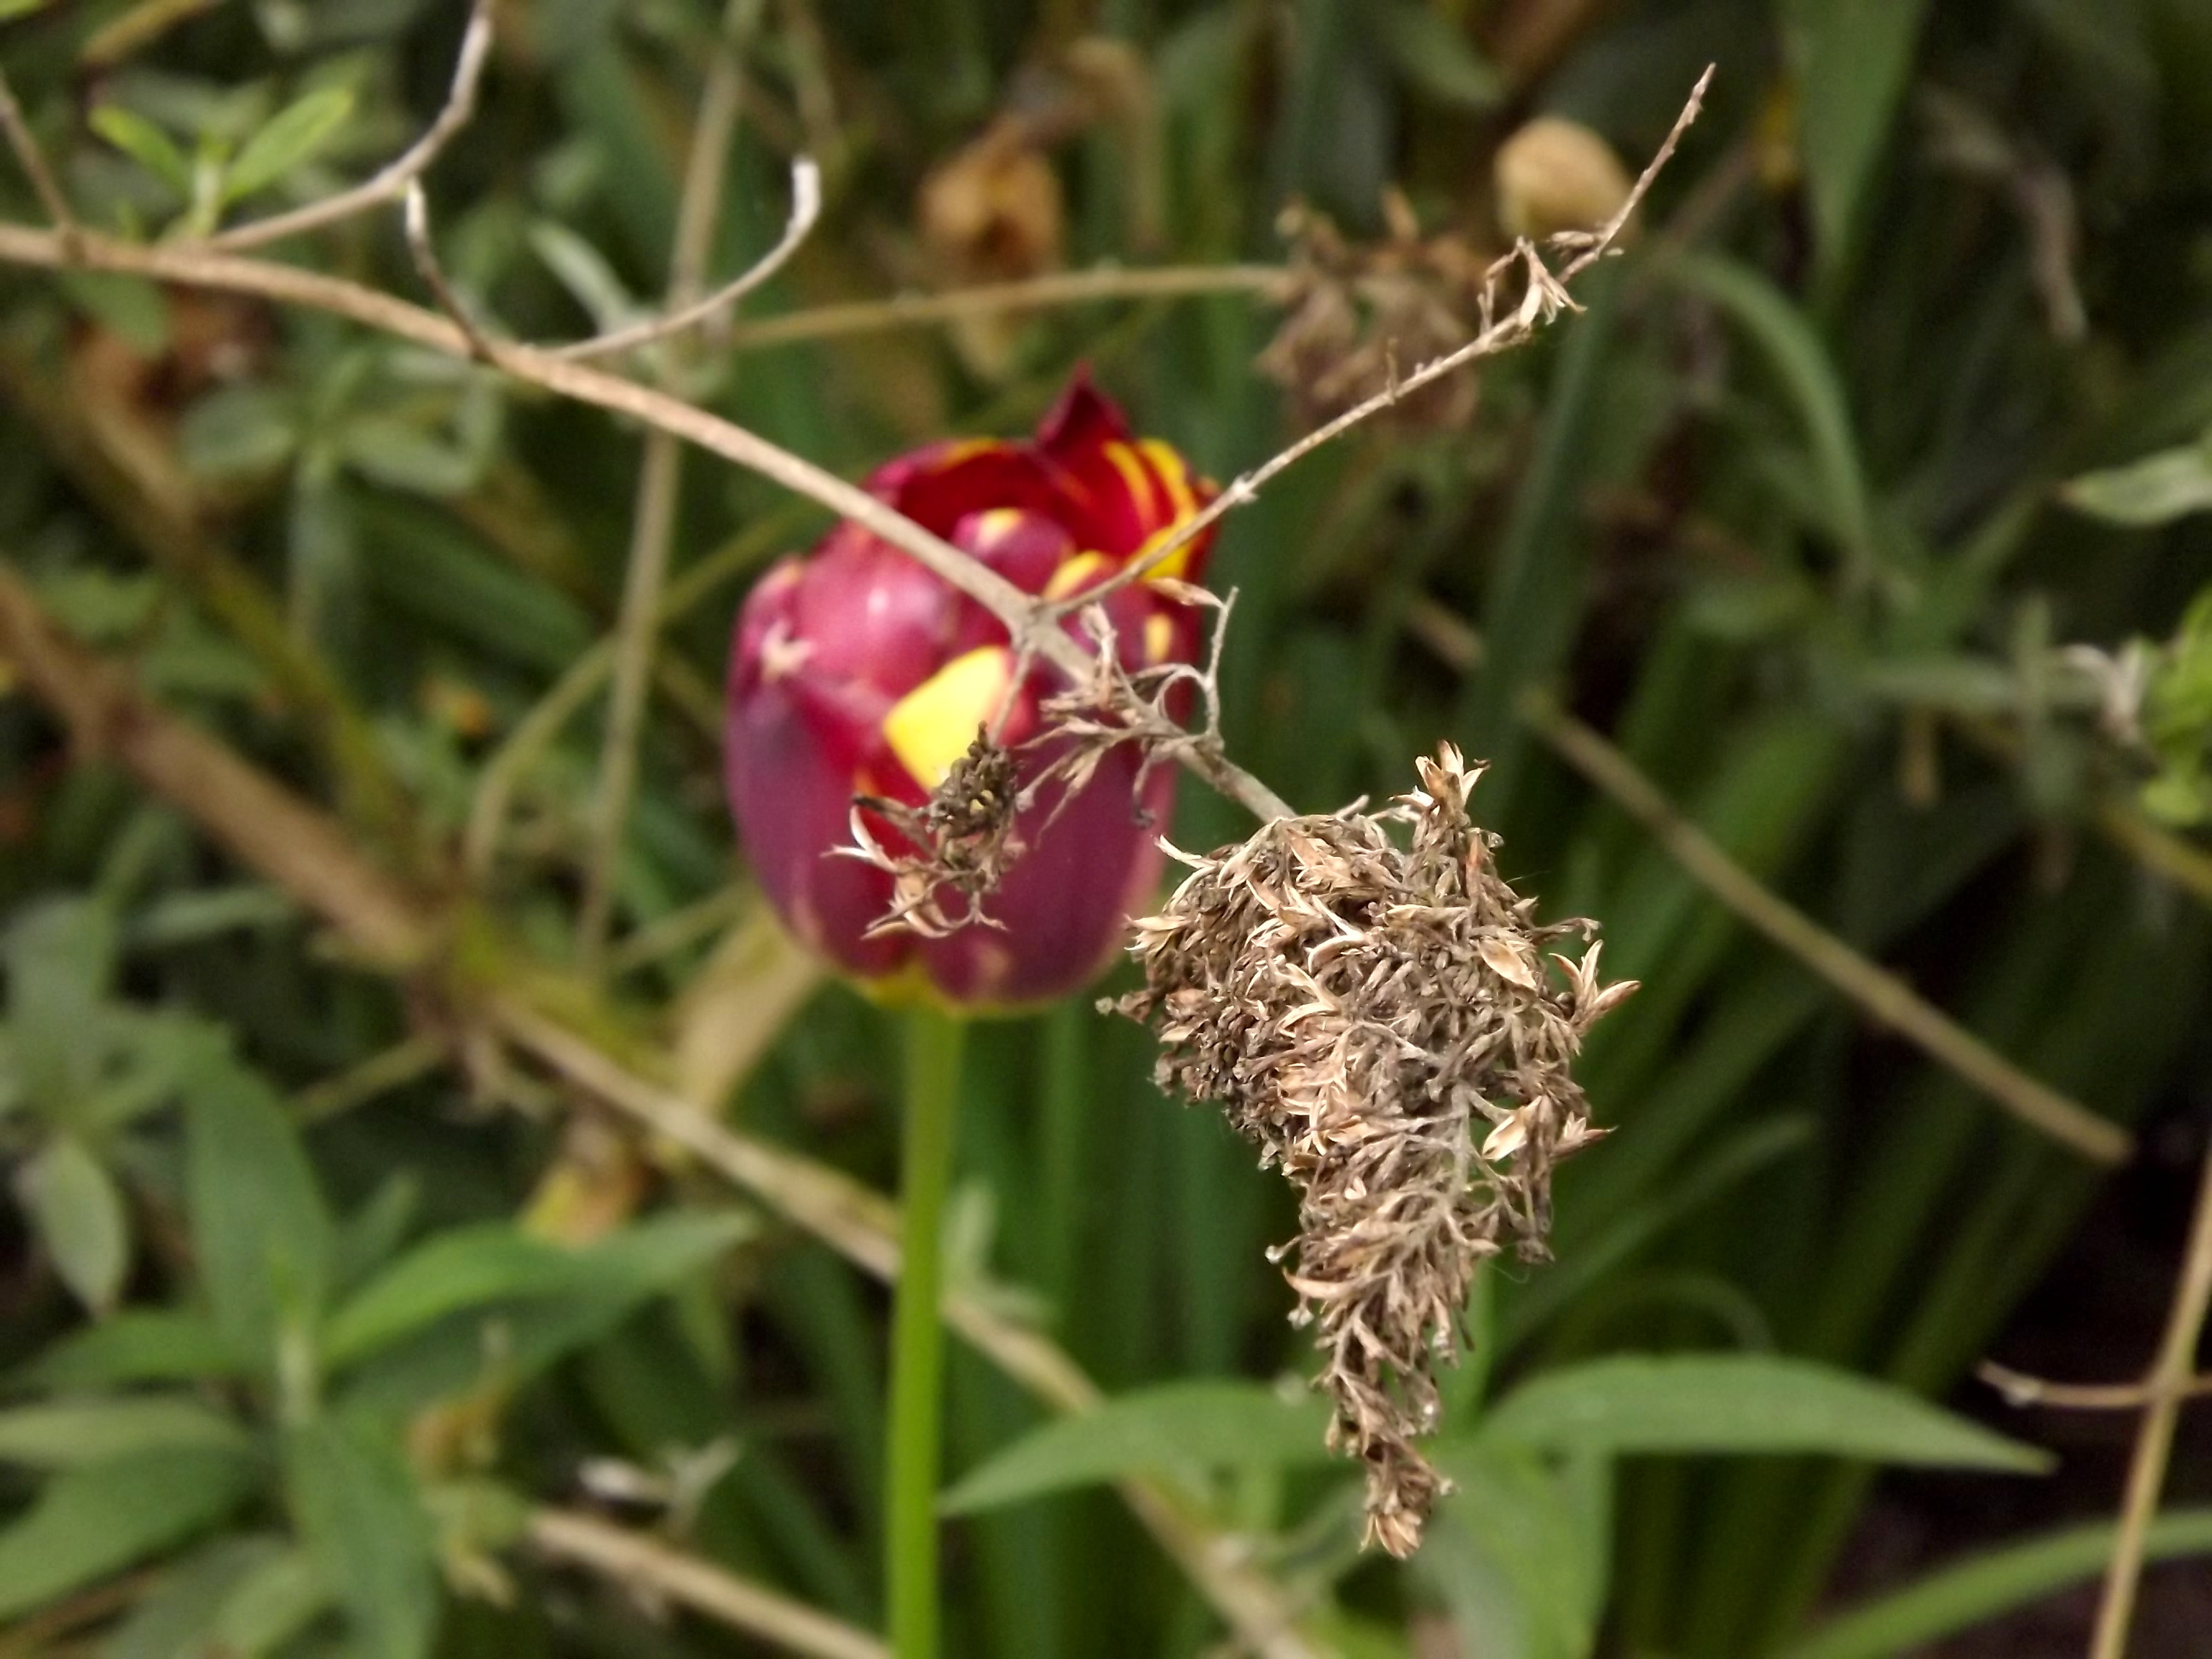 5989-rembrandt-tulpe